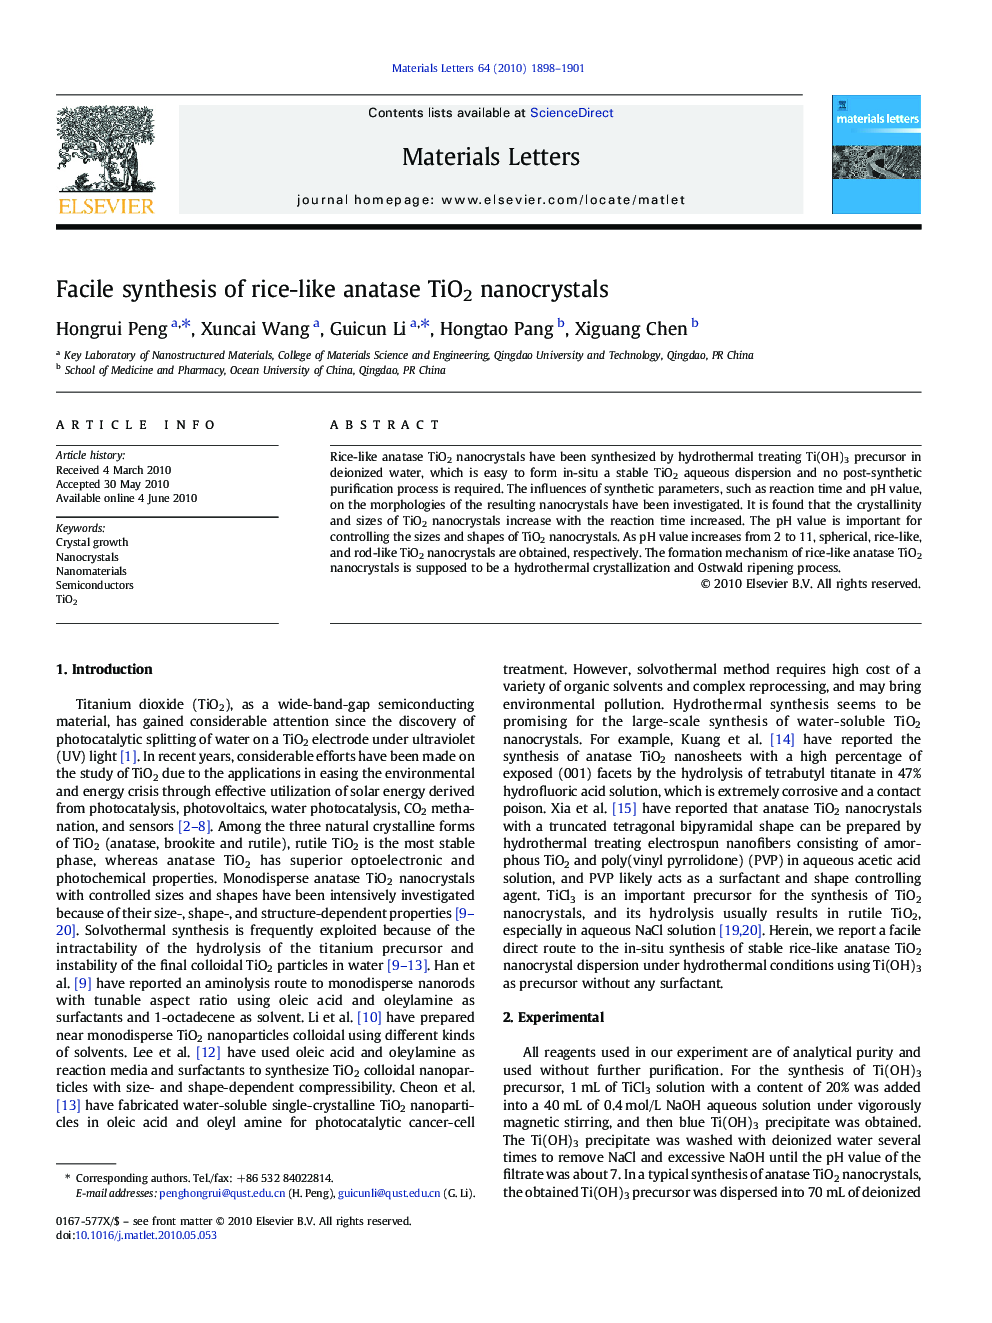 Facile synthesis of rice-like anatase TiO2 nanocrystals